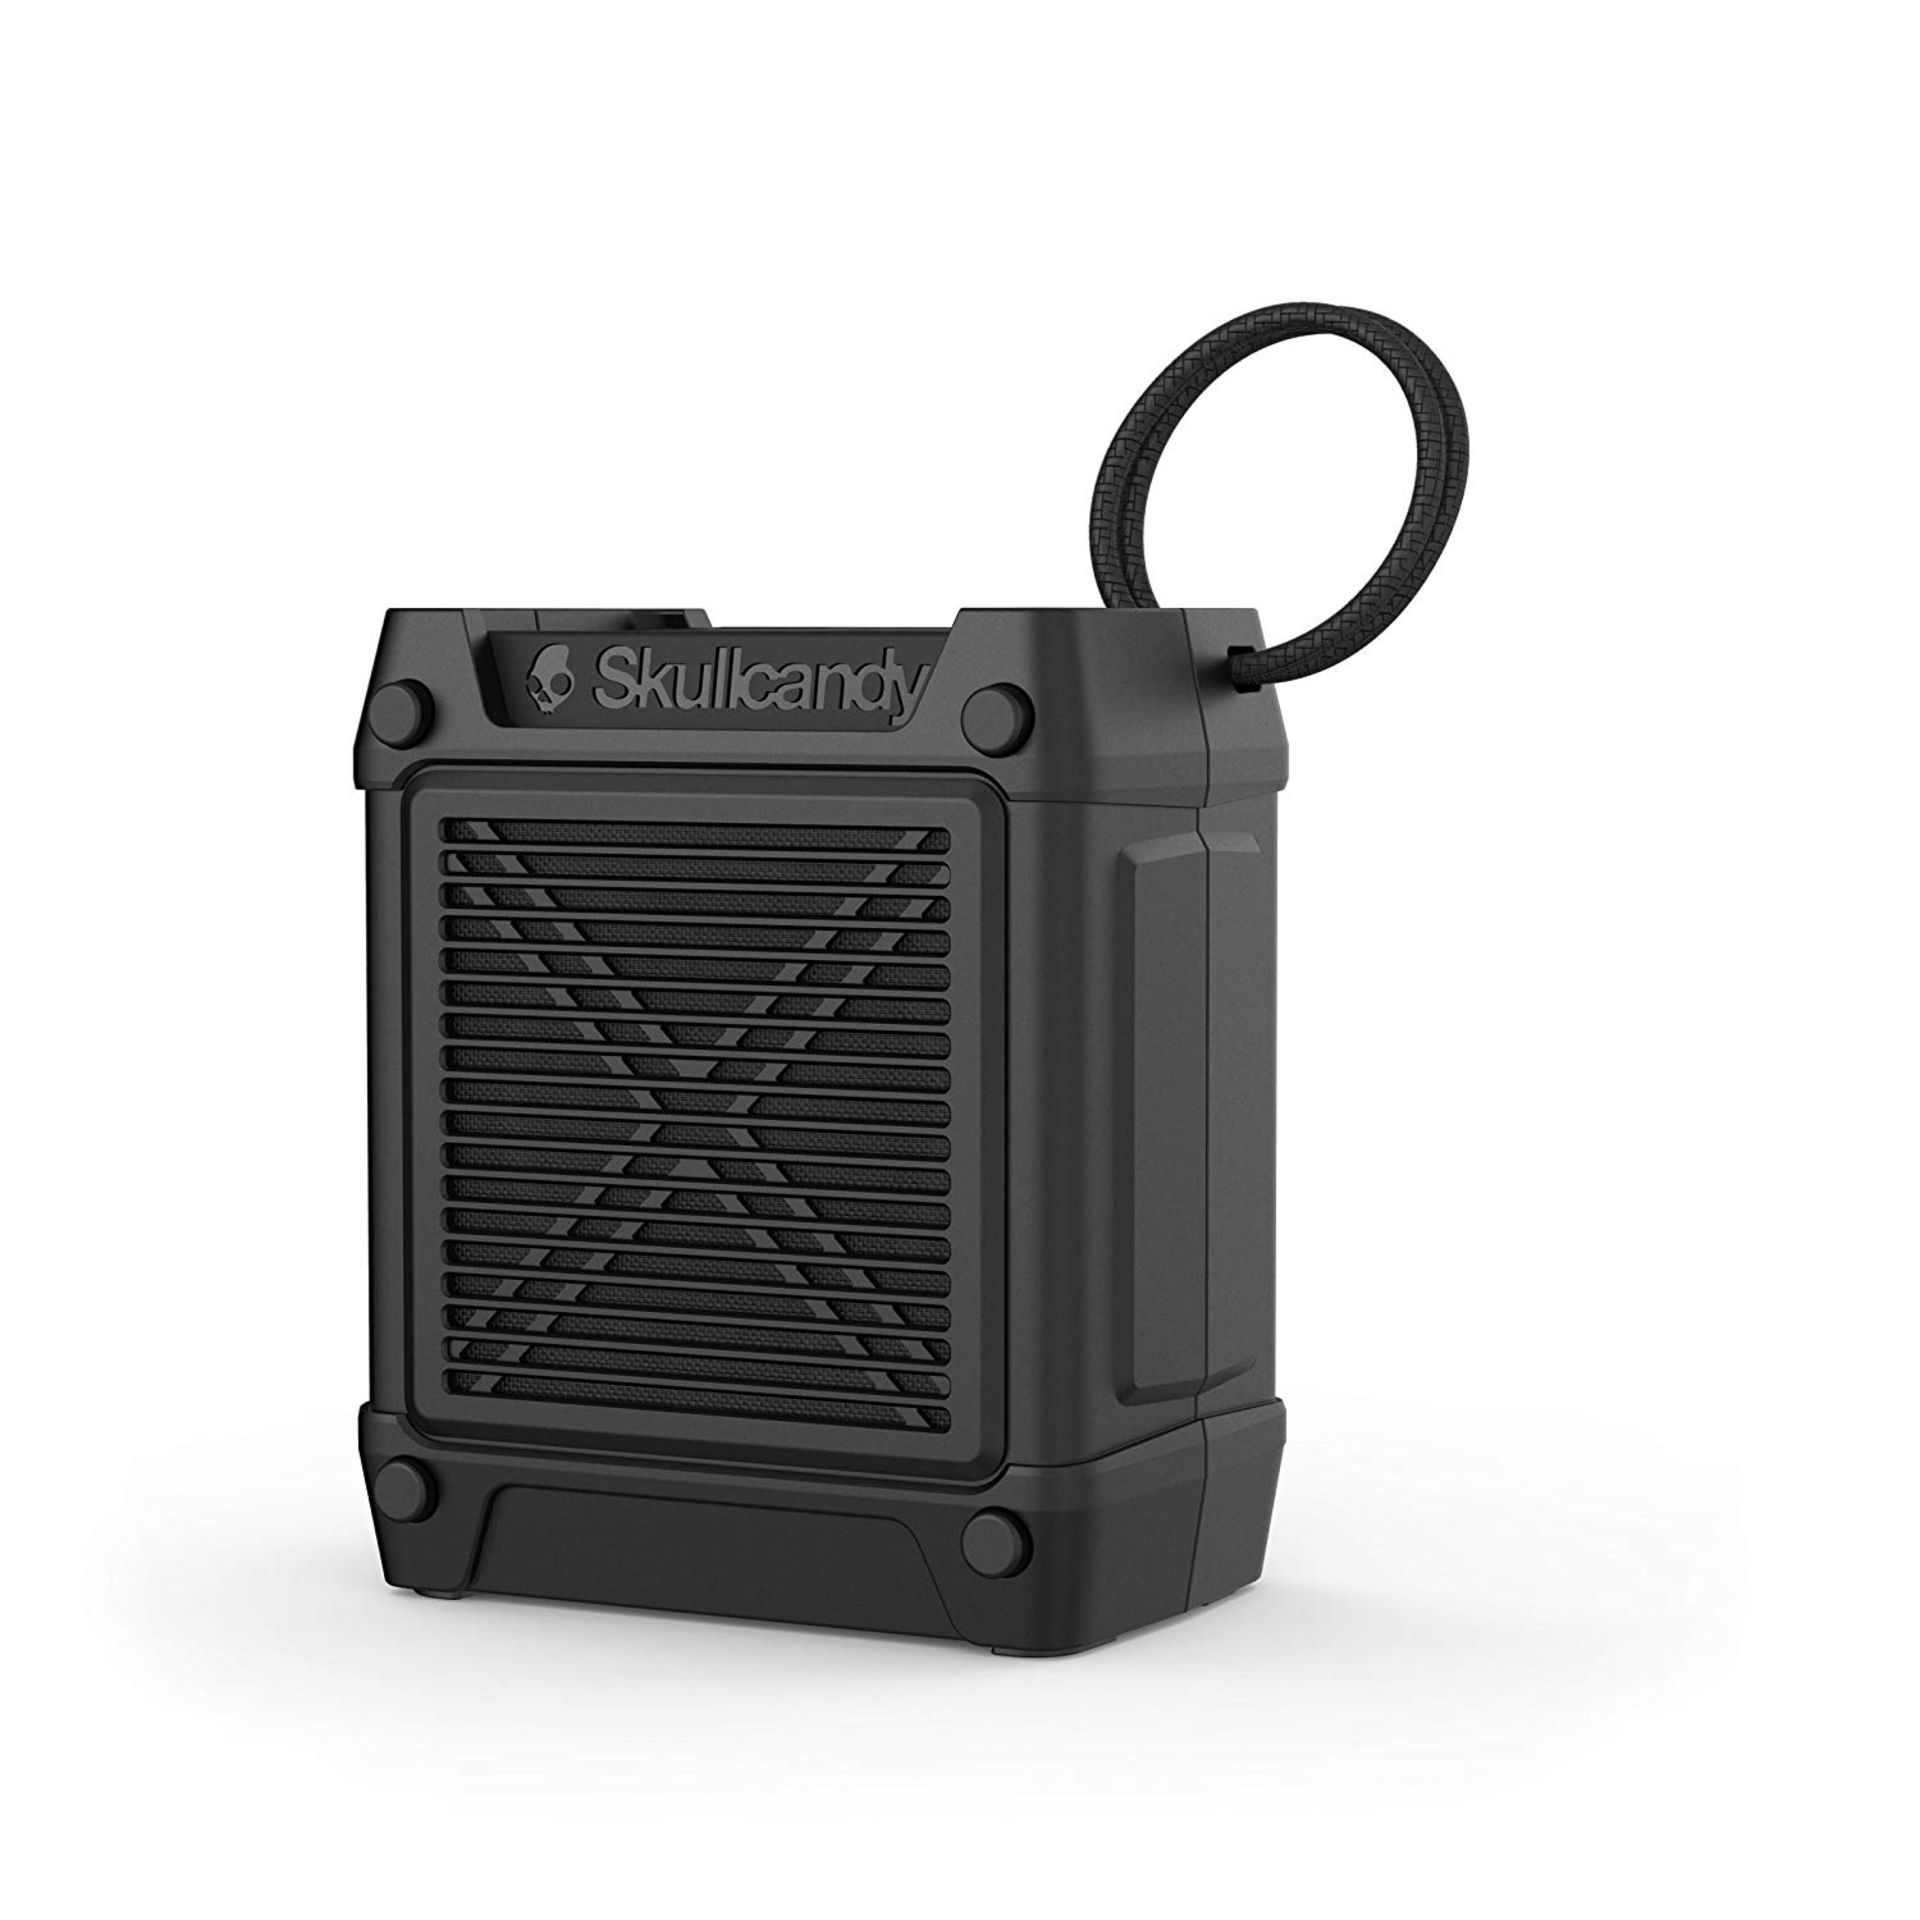 V Brand New Skullcandy Shrapnel Bluetooth Speaker - RRP £39.99 Amazon Price £27.98 - Water Resistant